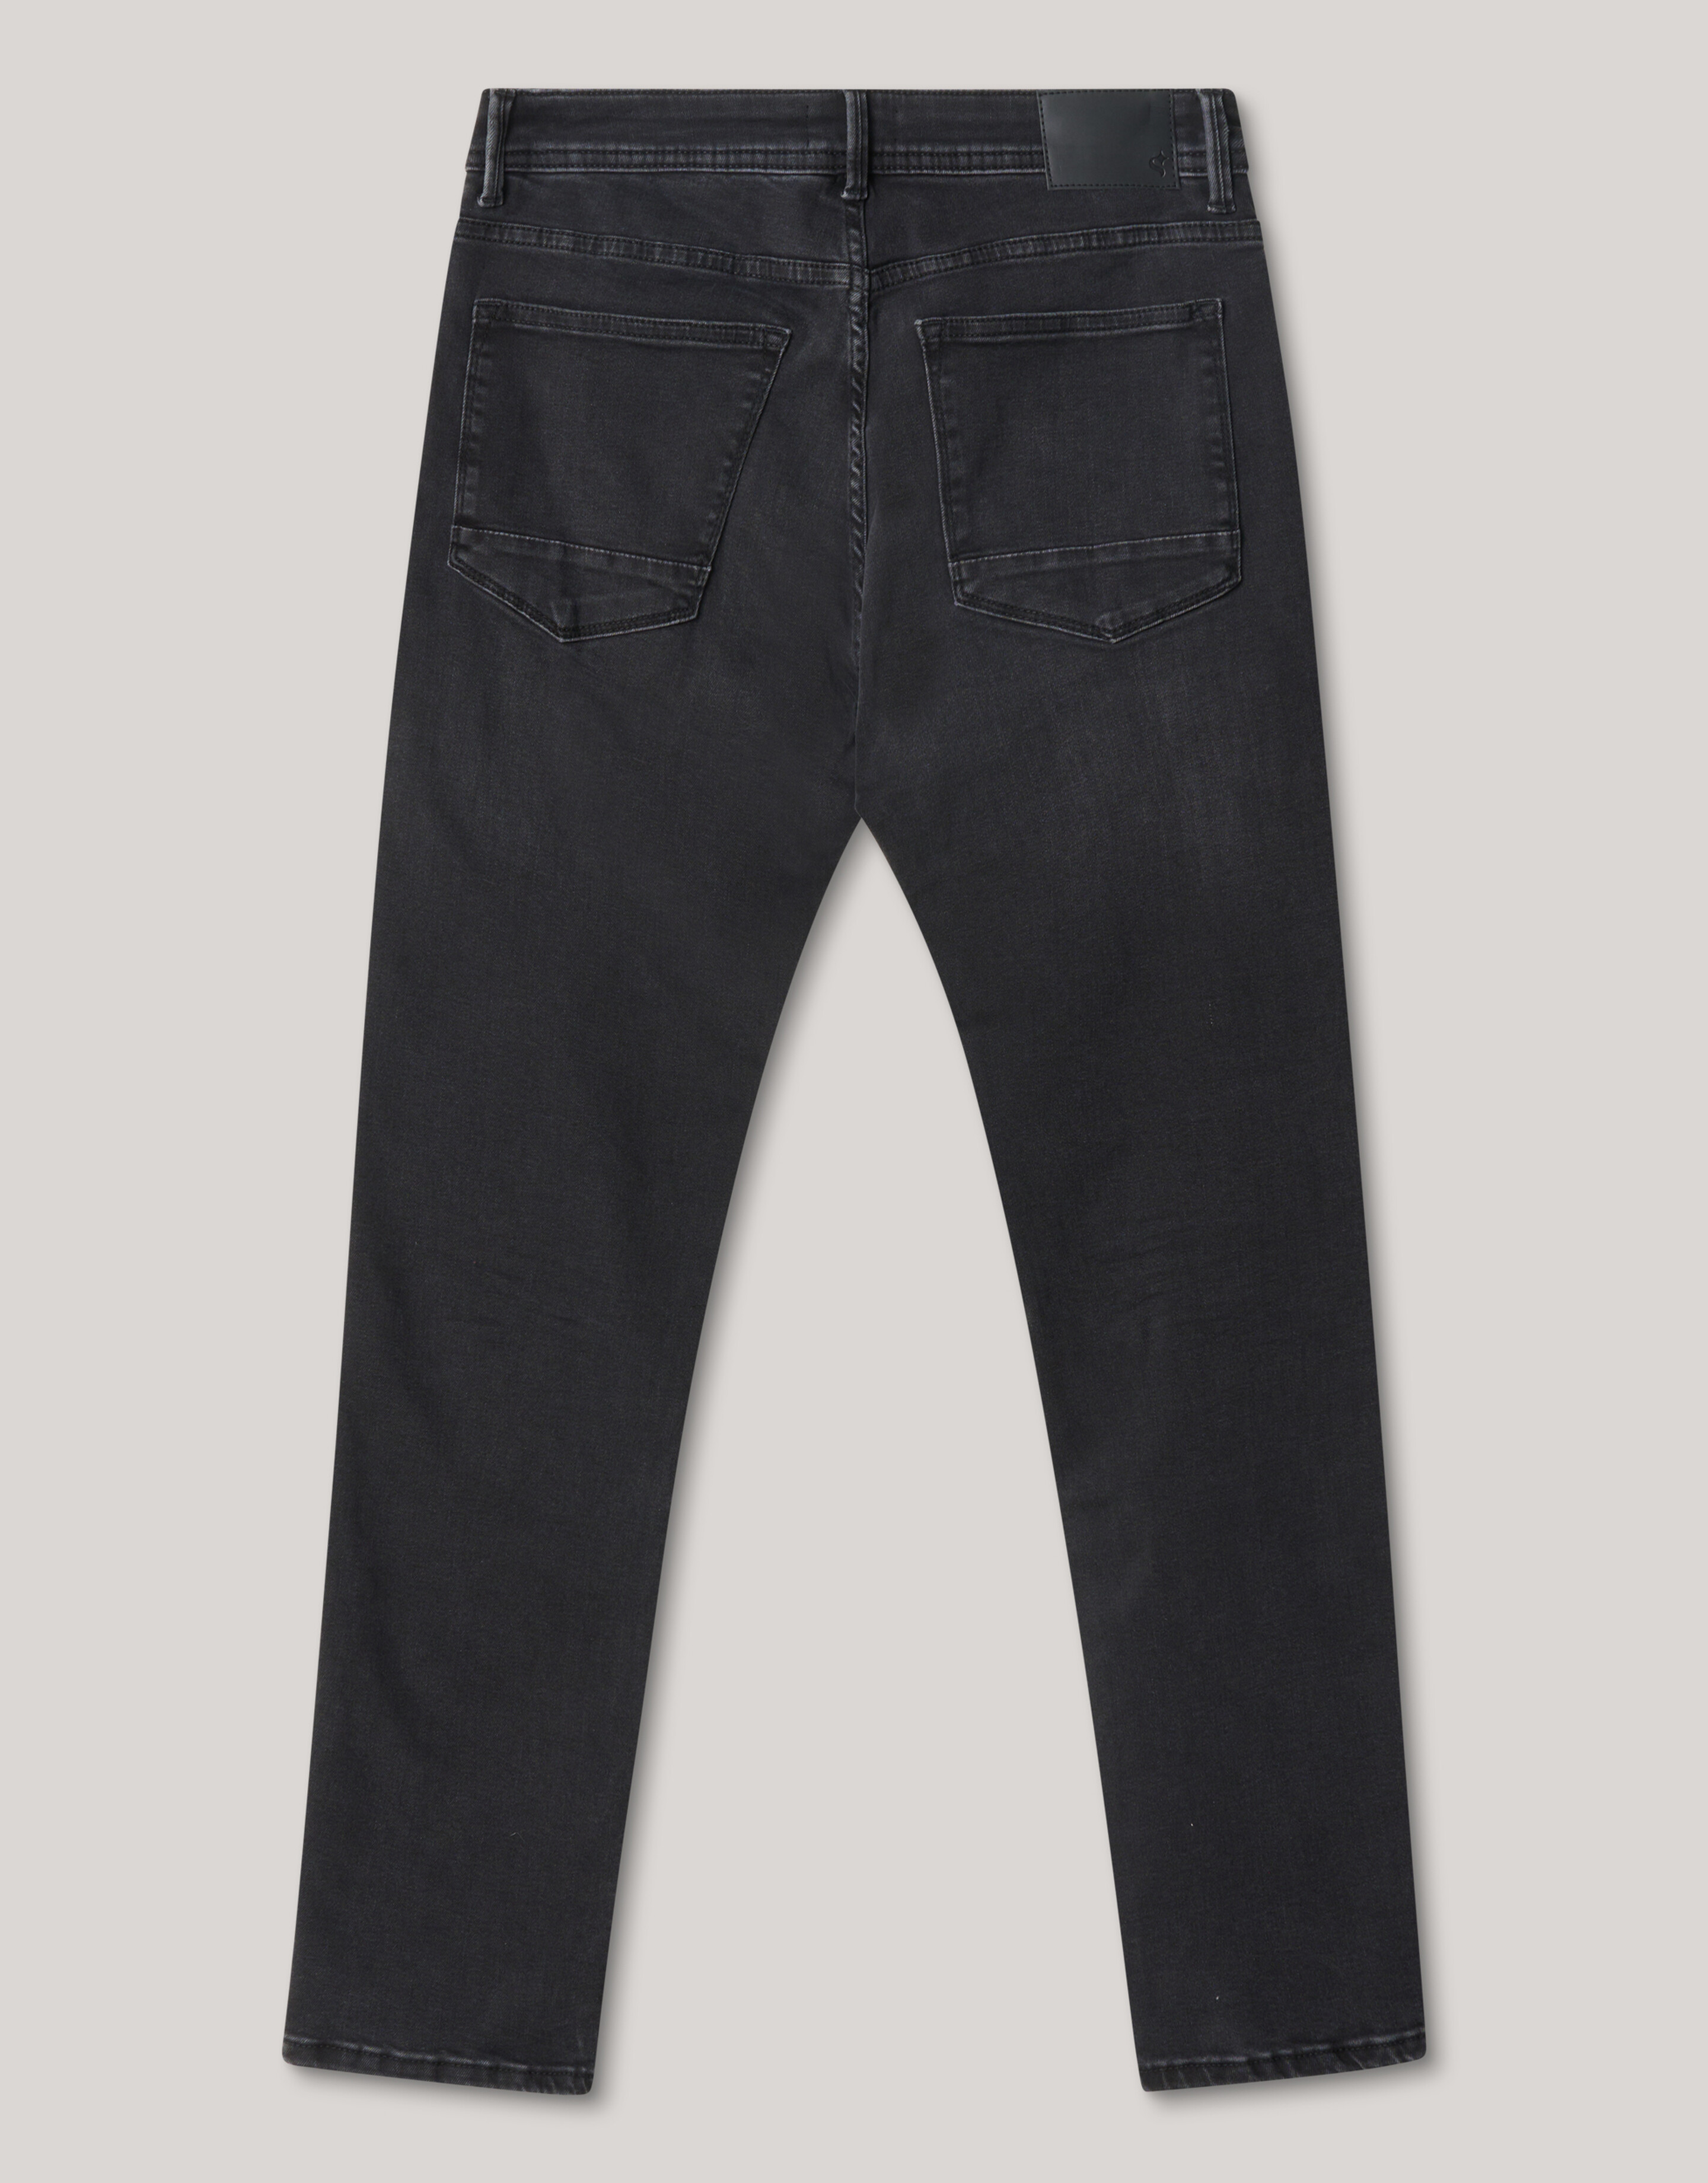 Slim Jeans Schwarz Länge 32 Refill